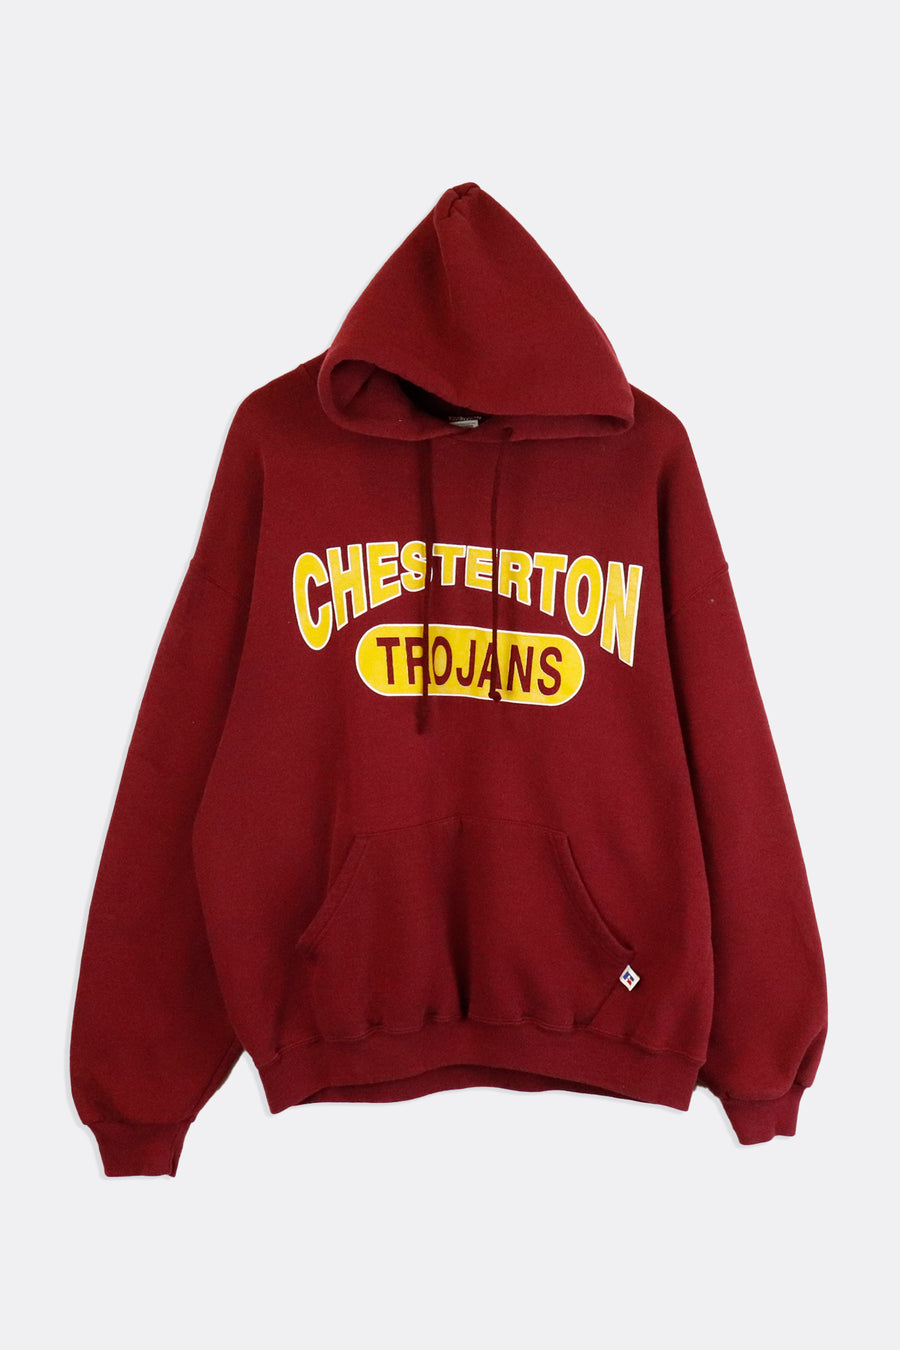 Vintage Chestertons Trojons Lettering Spellout Hooded Sweatshirt Sz L